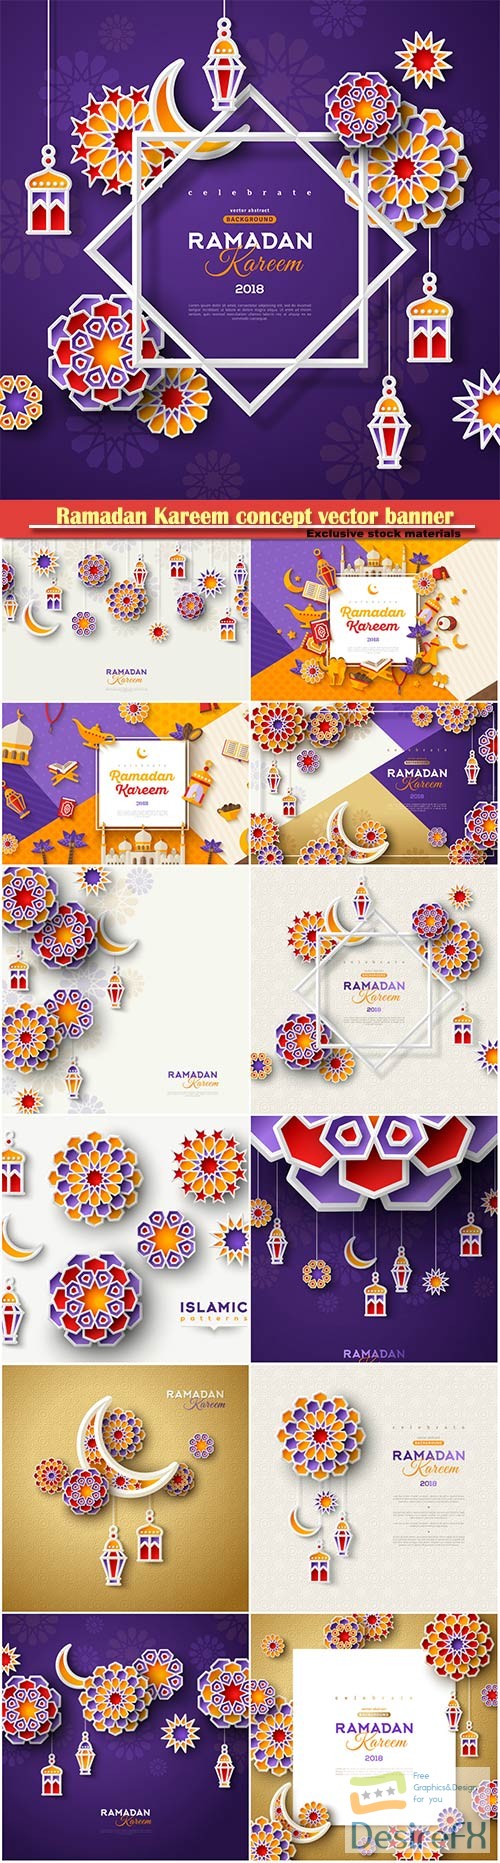 Ramadan Kareem concept vector banner with islamic geometric patterns